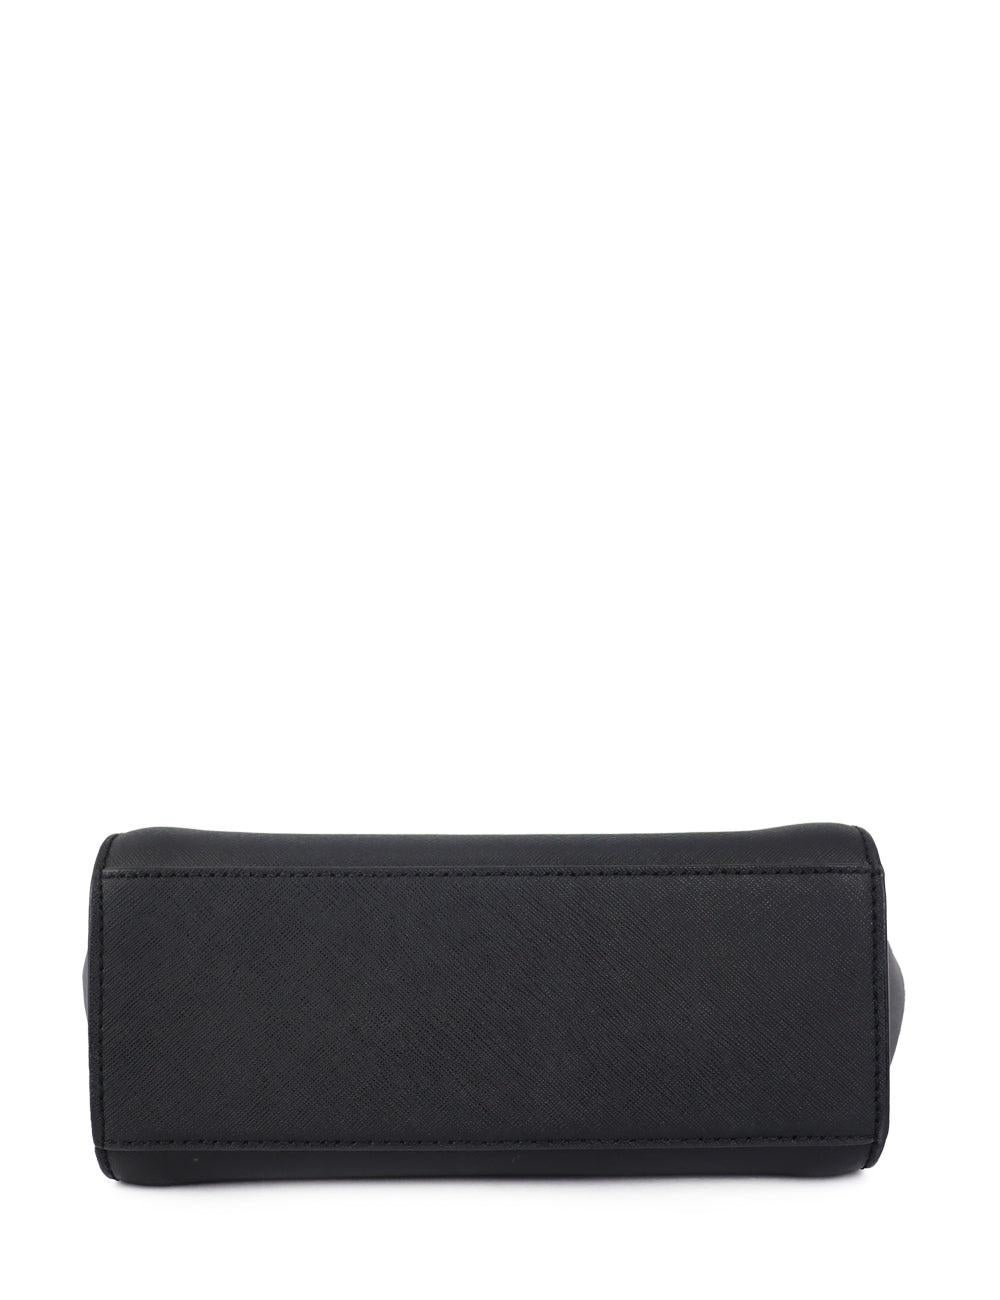 Women's Michael Kors Black Coated Leather Small Crossbody Bag